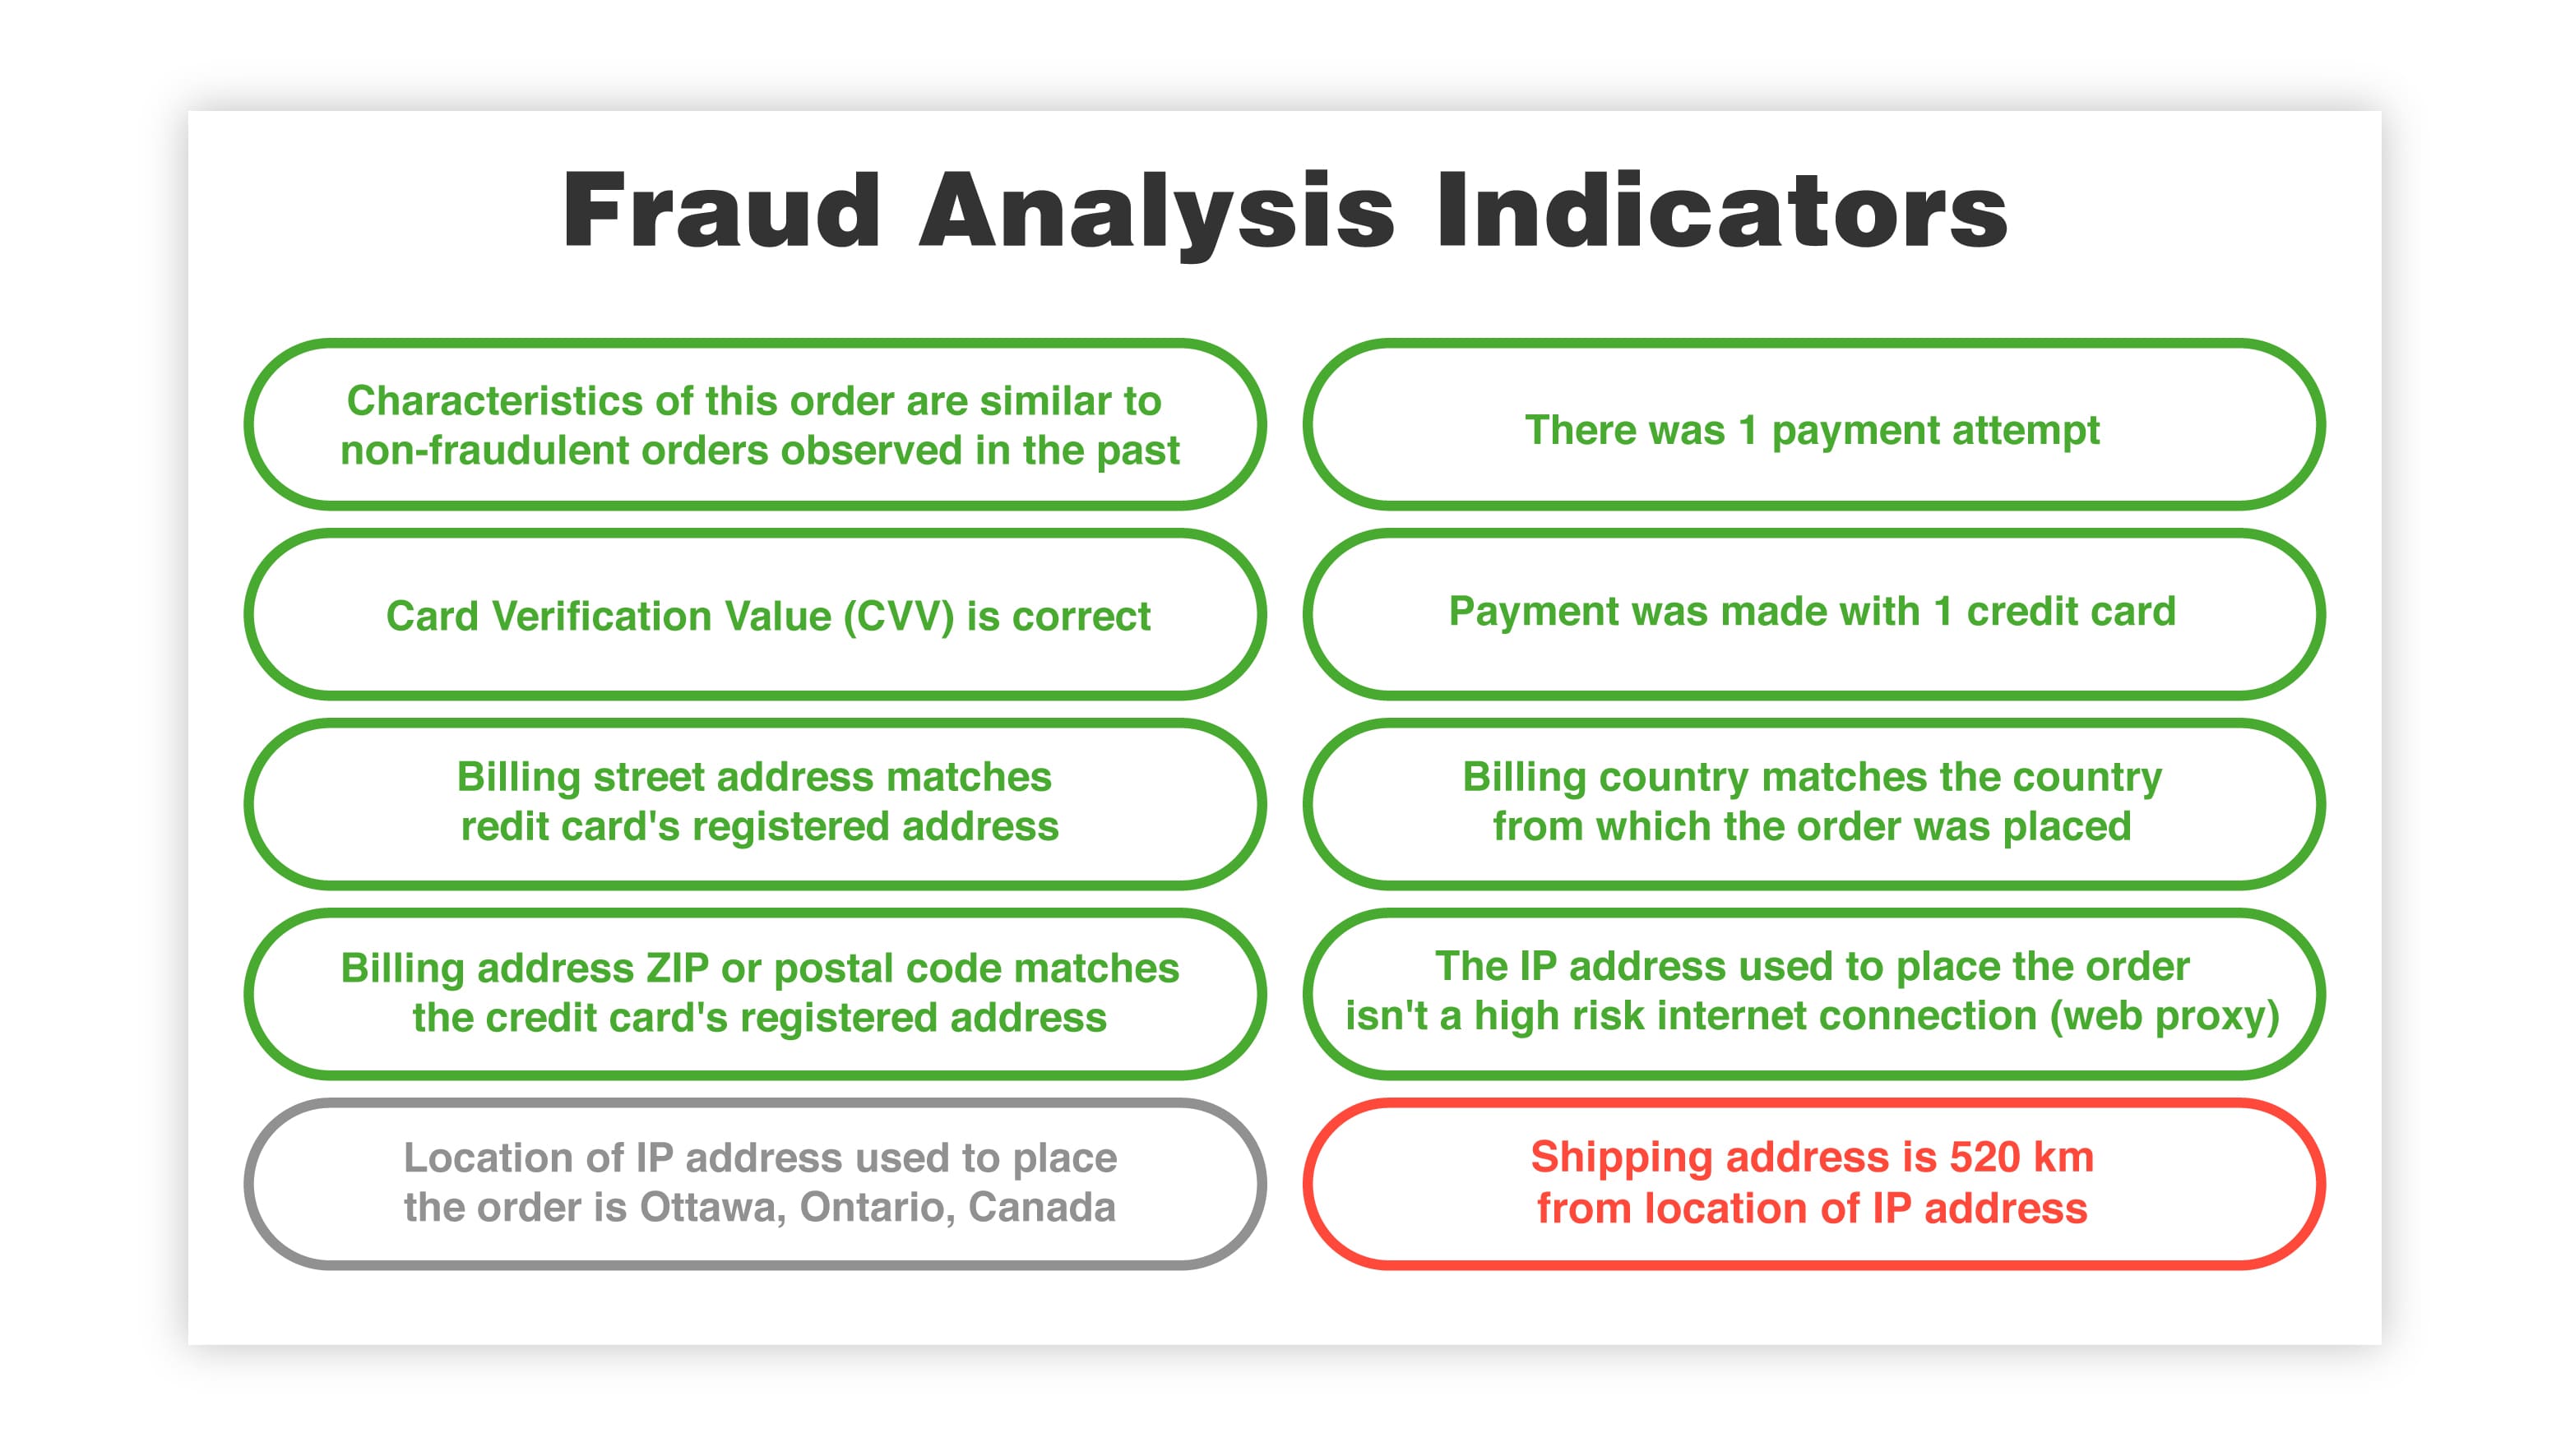 chargeback fraud analysis indicators